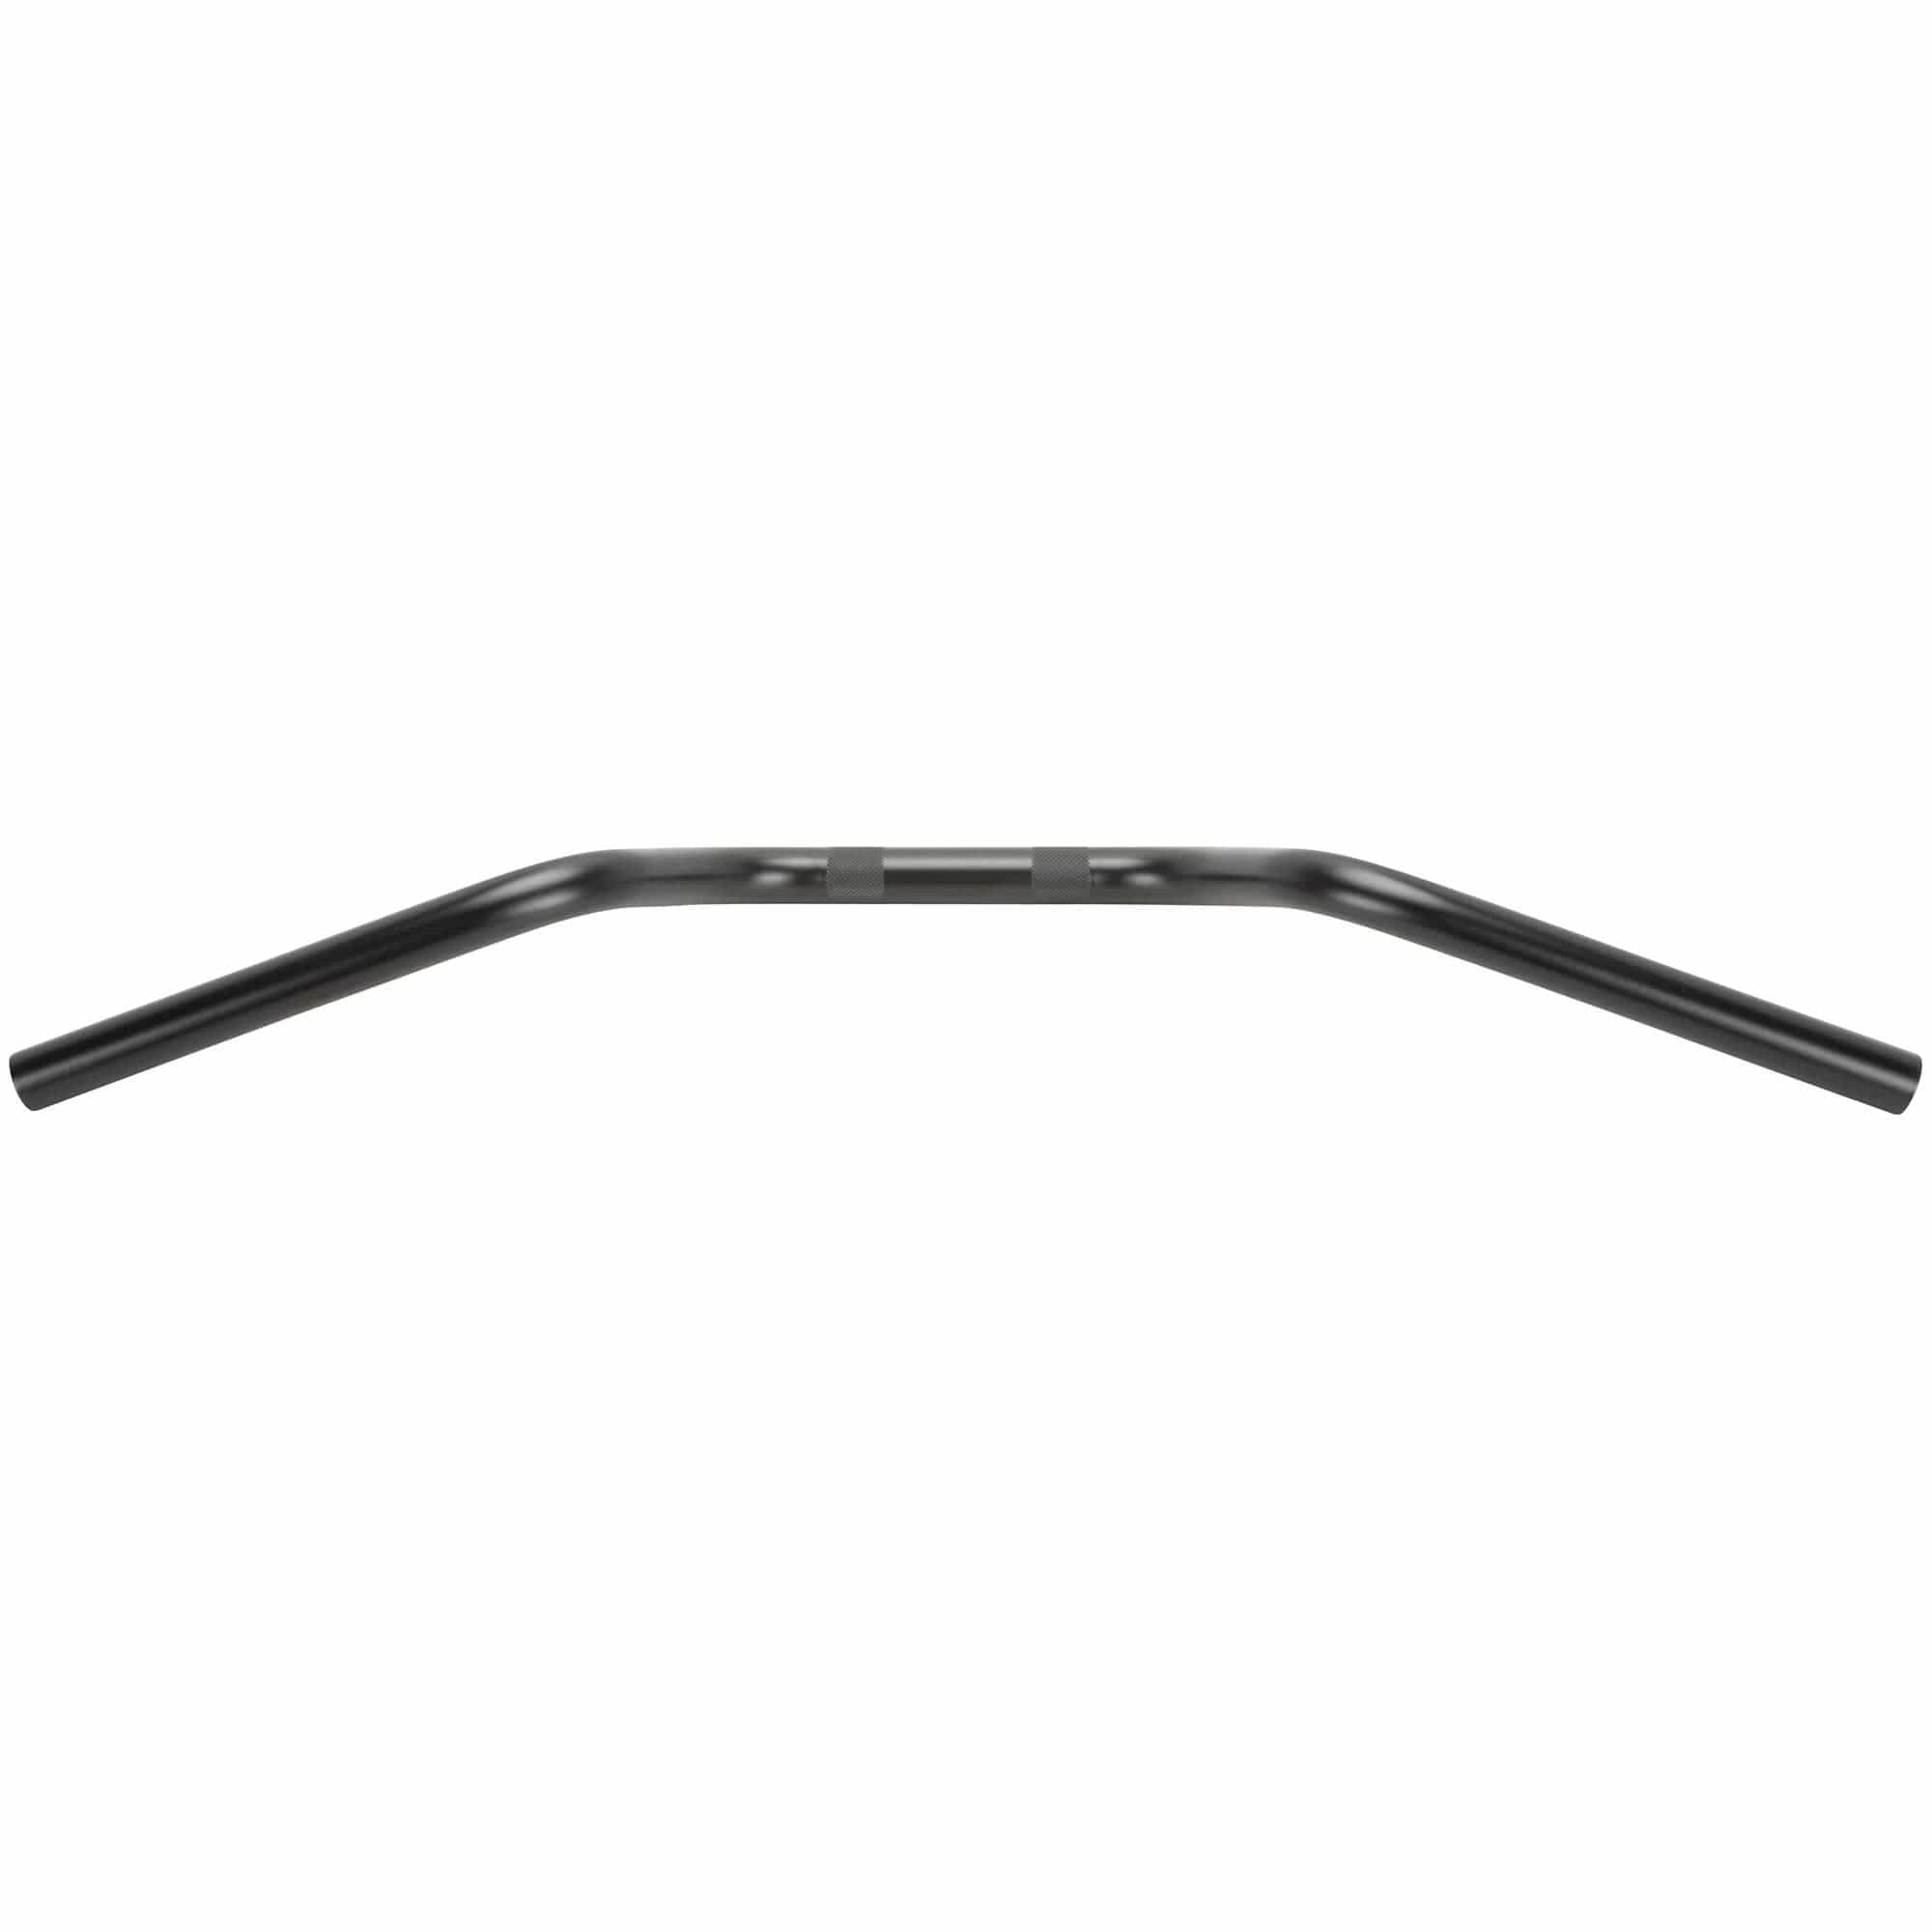 Lowbrow Customs Super Four Bar Handlebars - 1 inch - Black